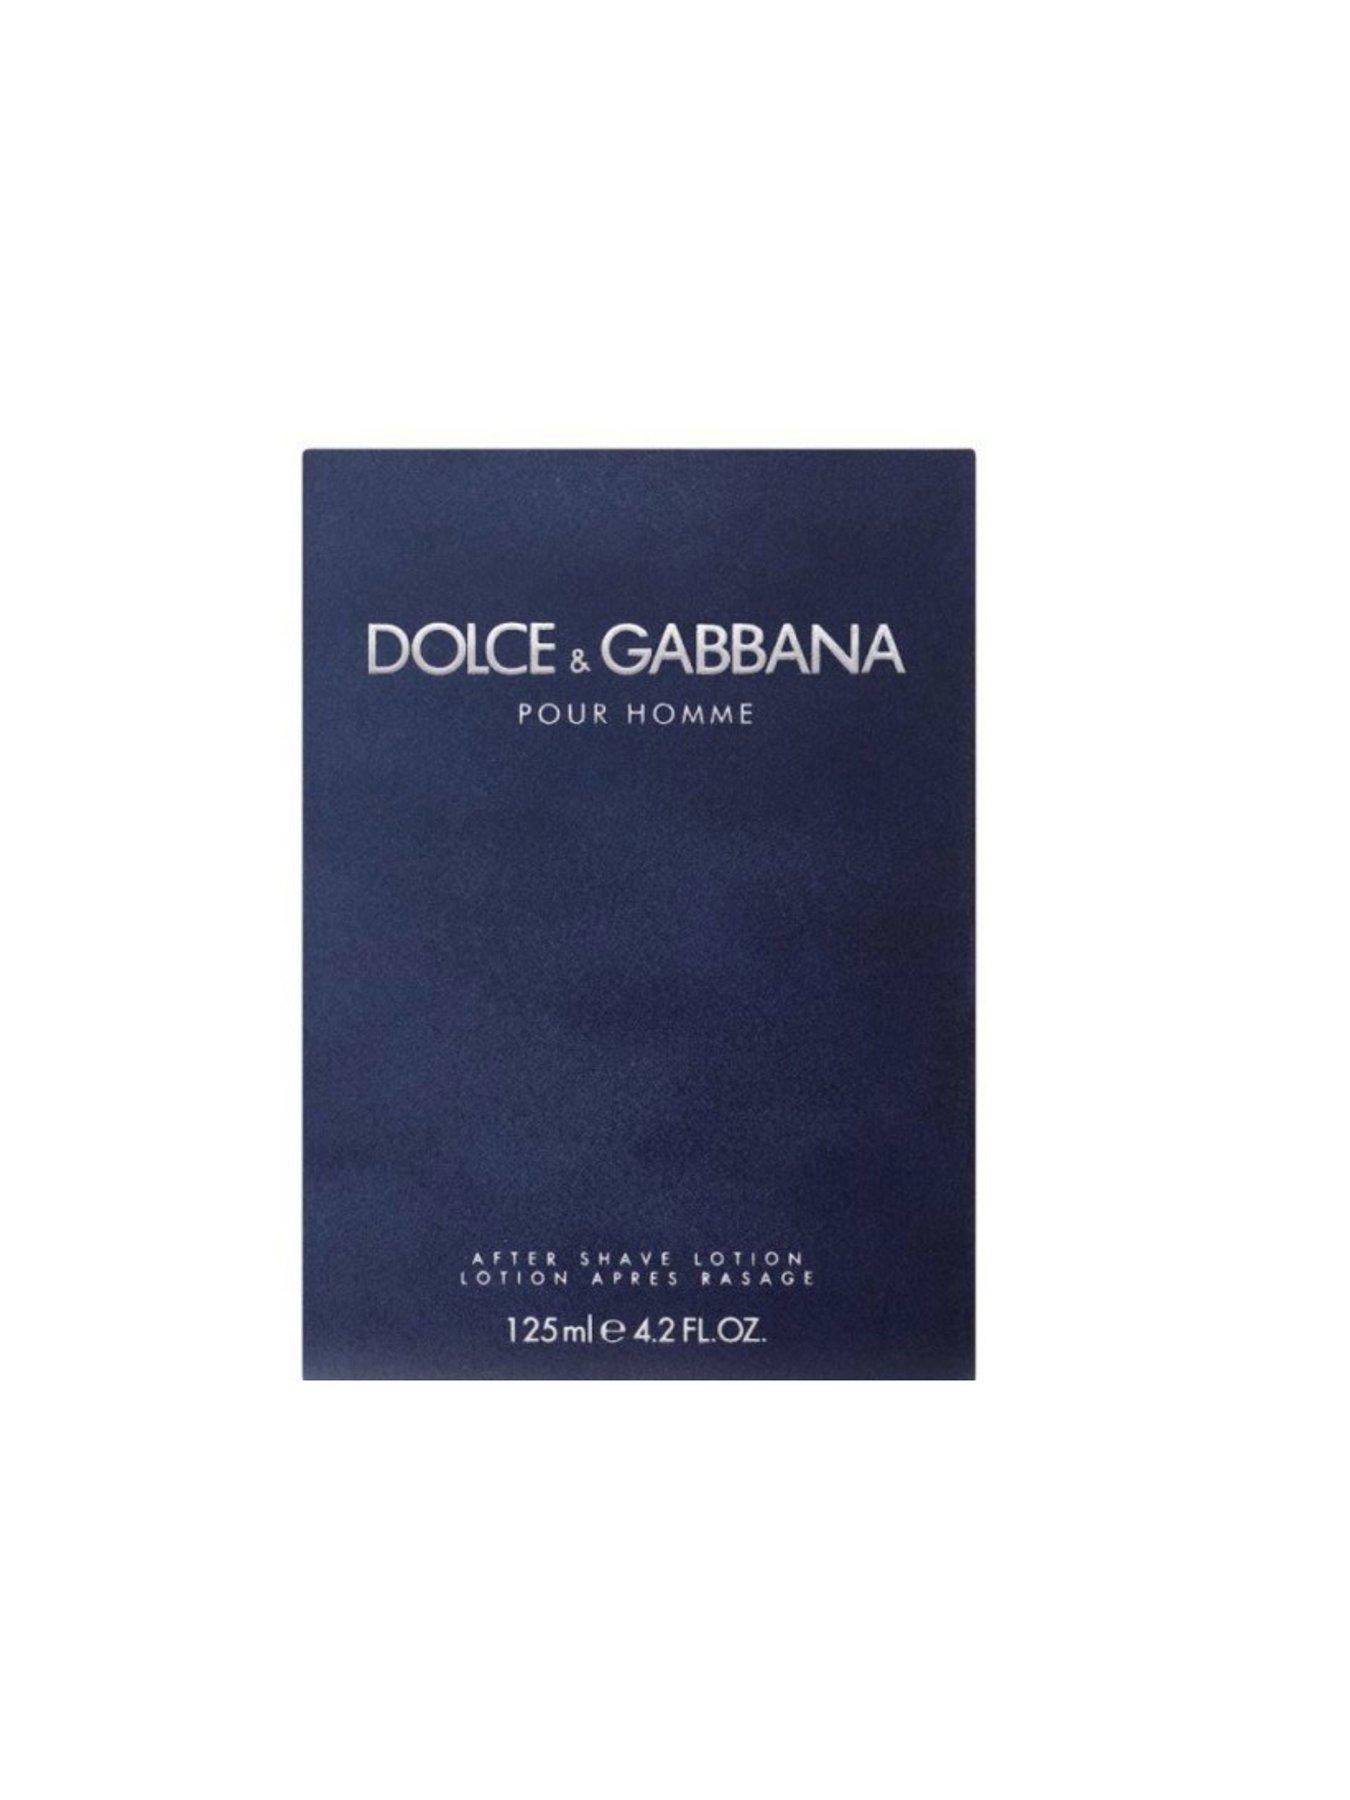 Dolce & Gabbana Pour Homme Aftershave Splash 125ml 